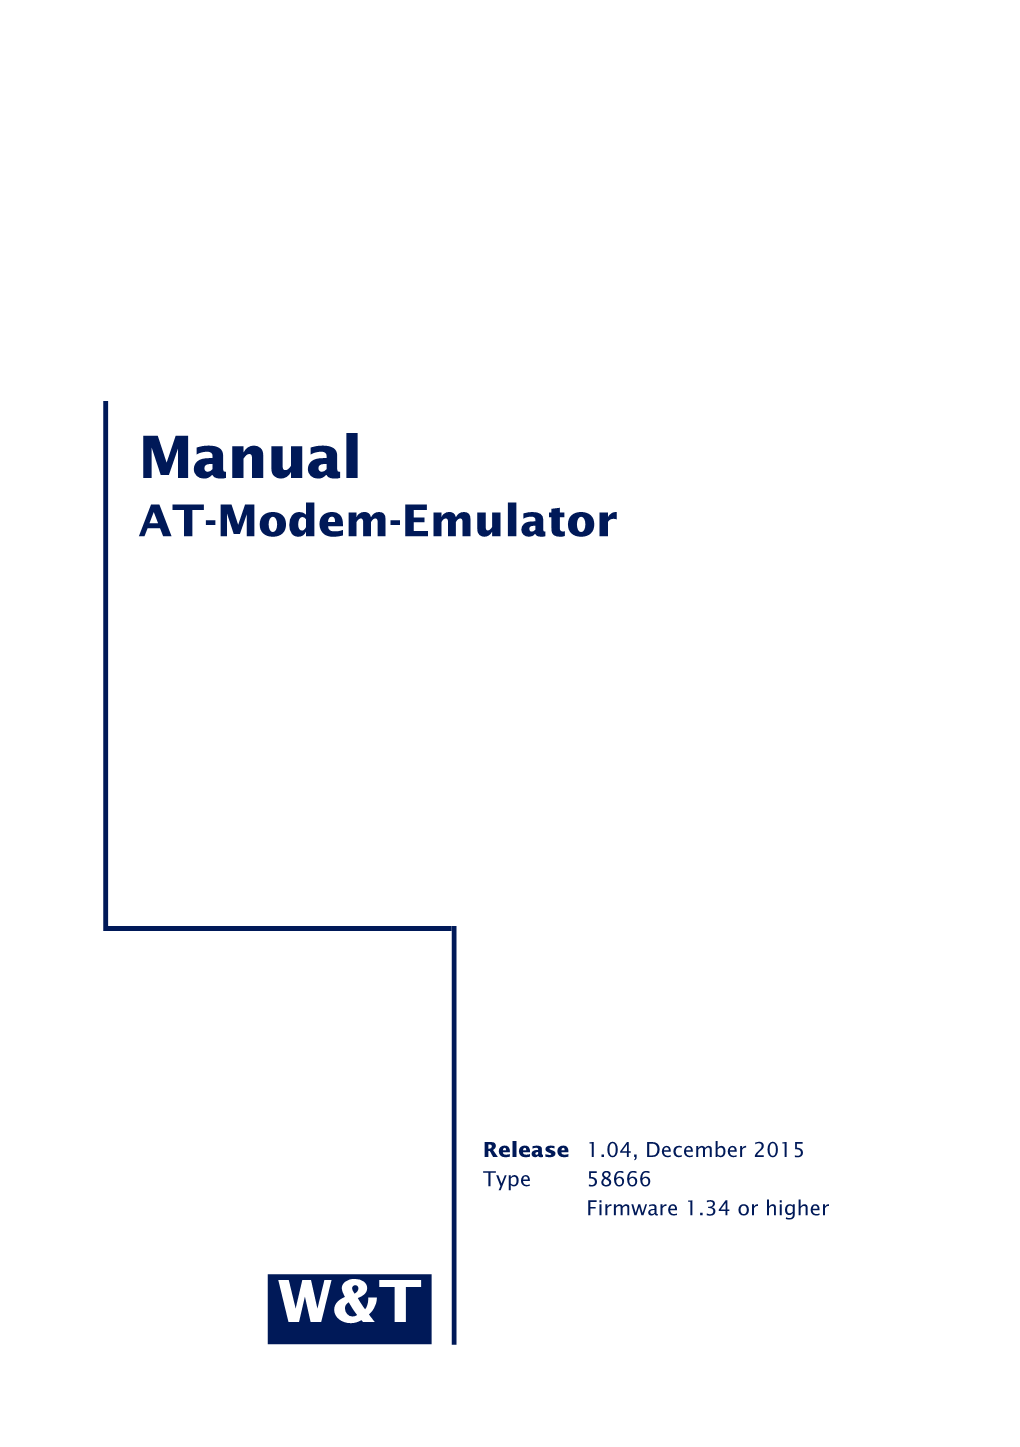 Manual AT-Modem-Emulator